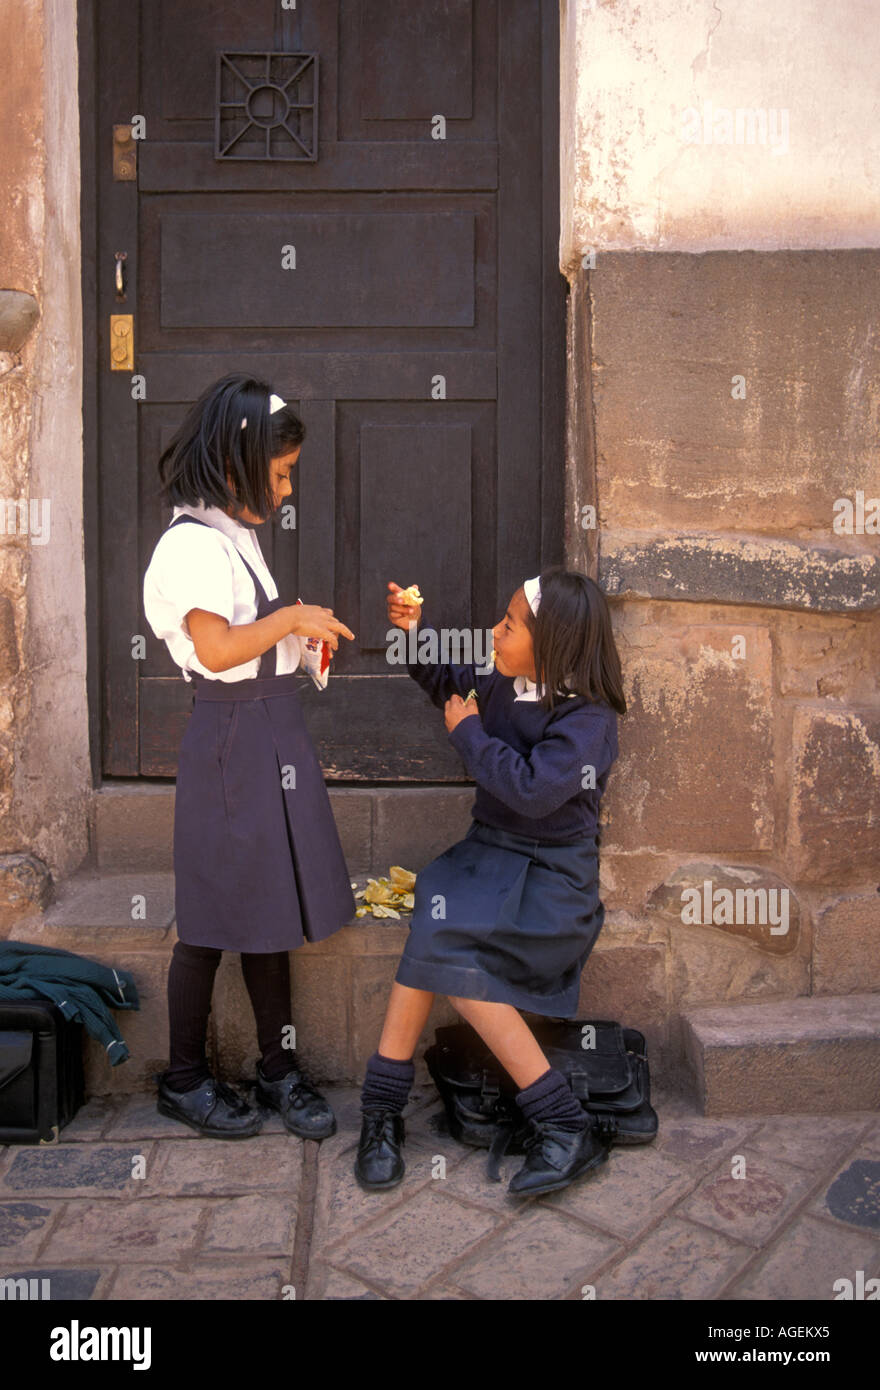 2, two, Peruvians, Peruvian girls, schoolgirls, schoolchildren, wearing school uniform, eating snack, Calle Ahuacpinta, Cuzco, Peru, South America Stock Photo